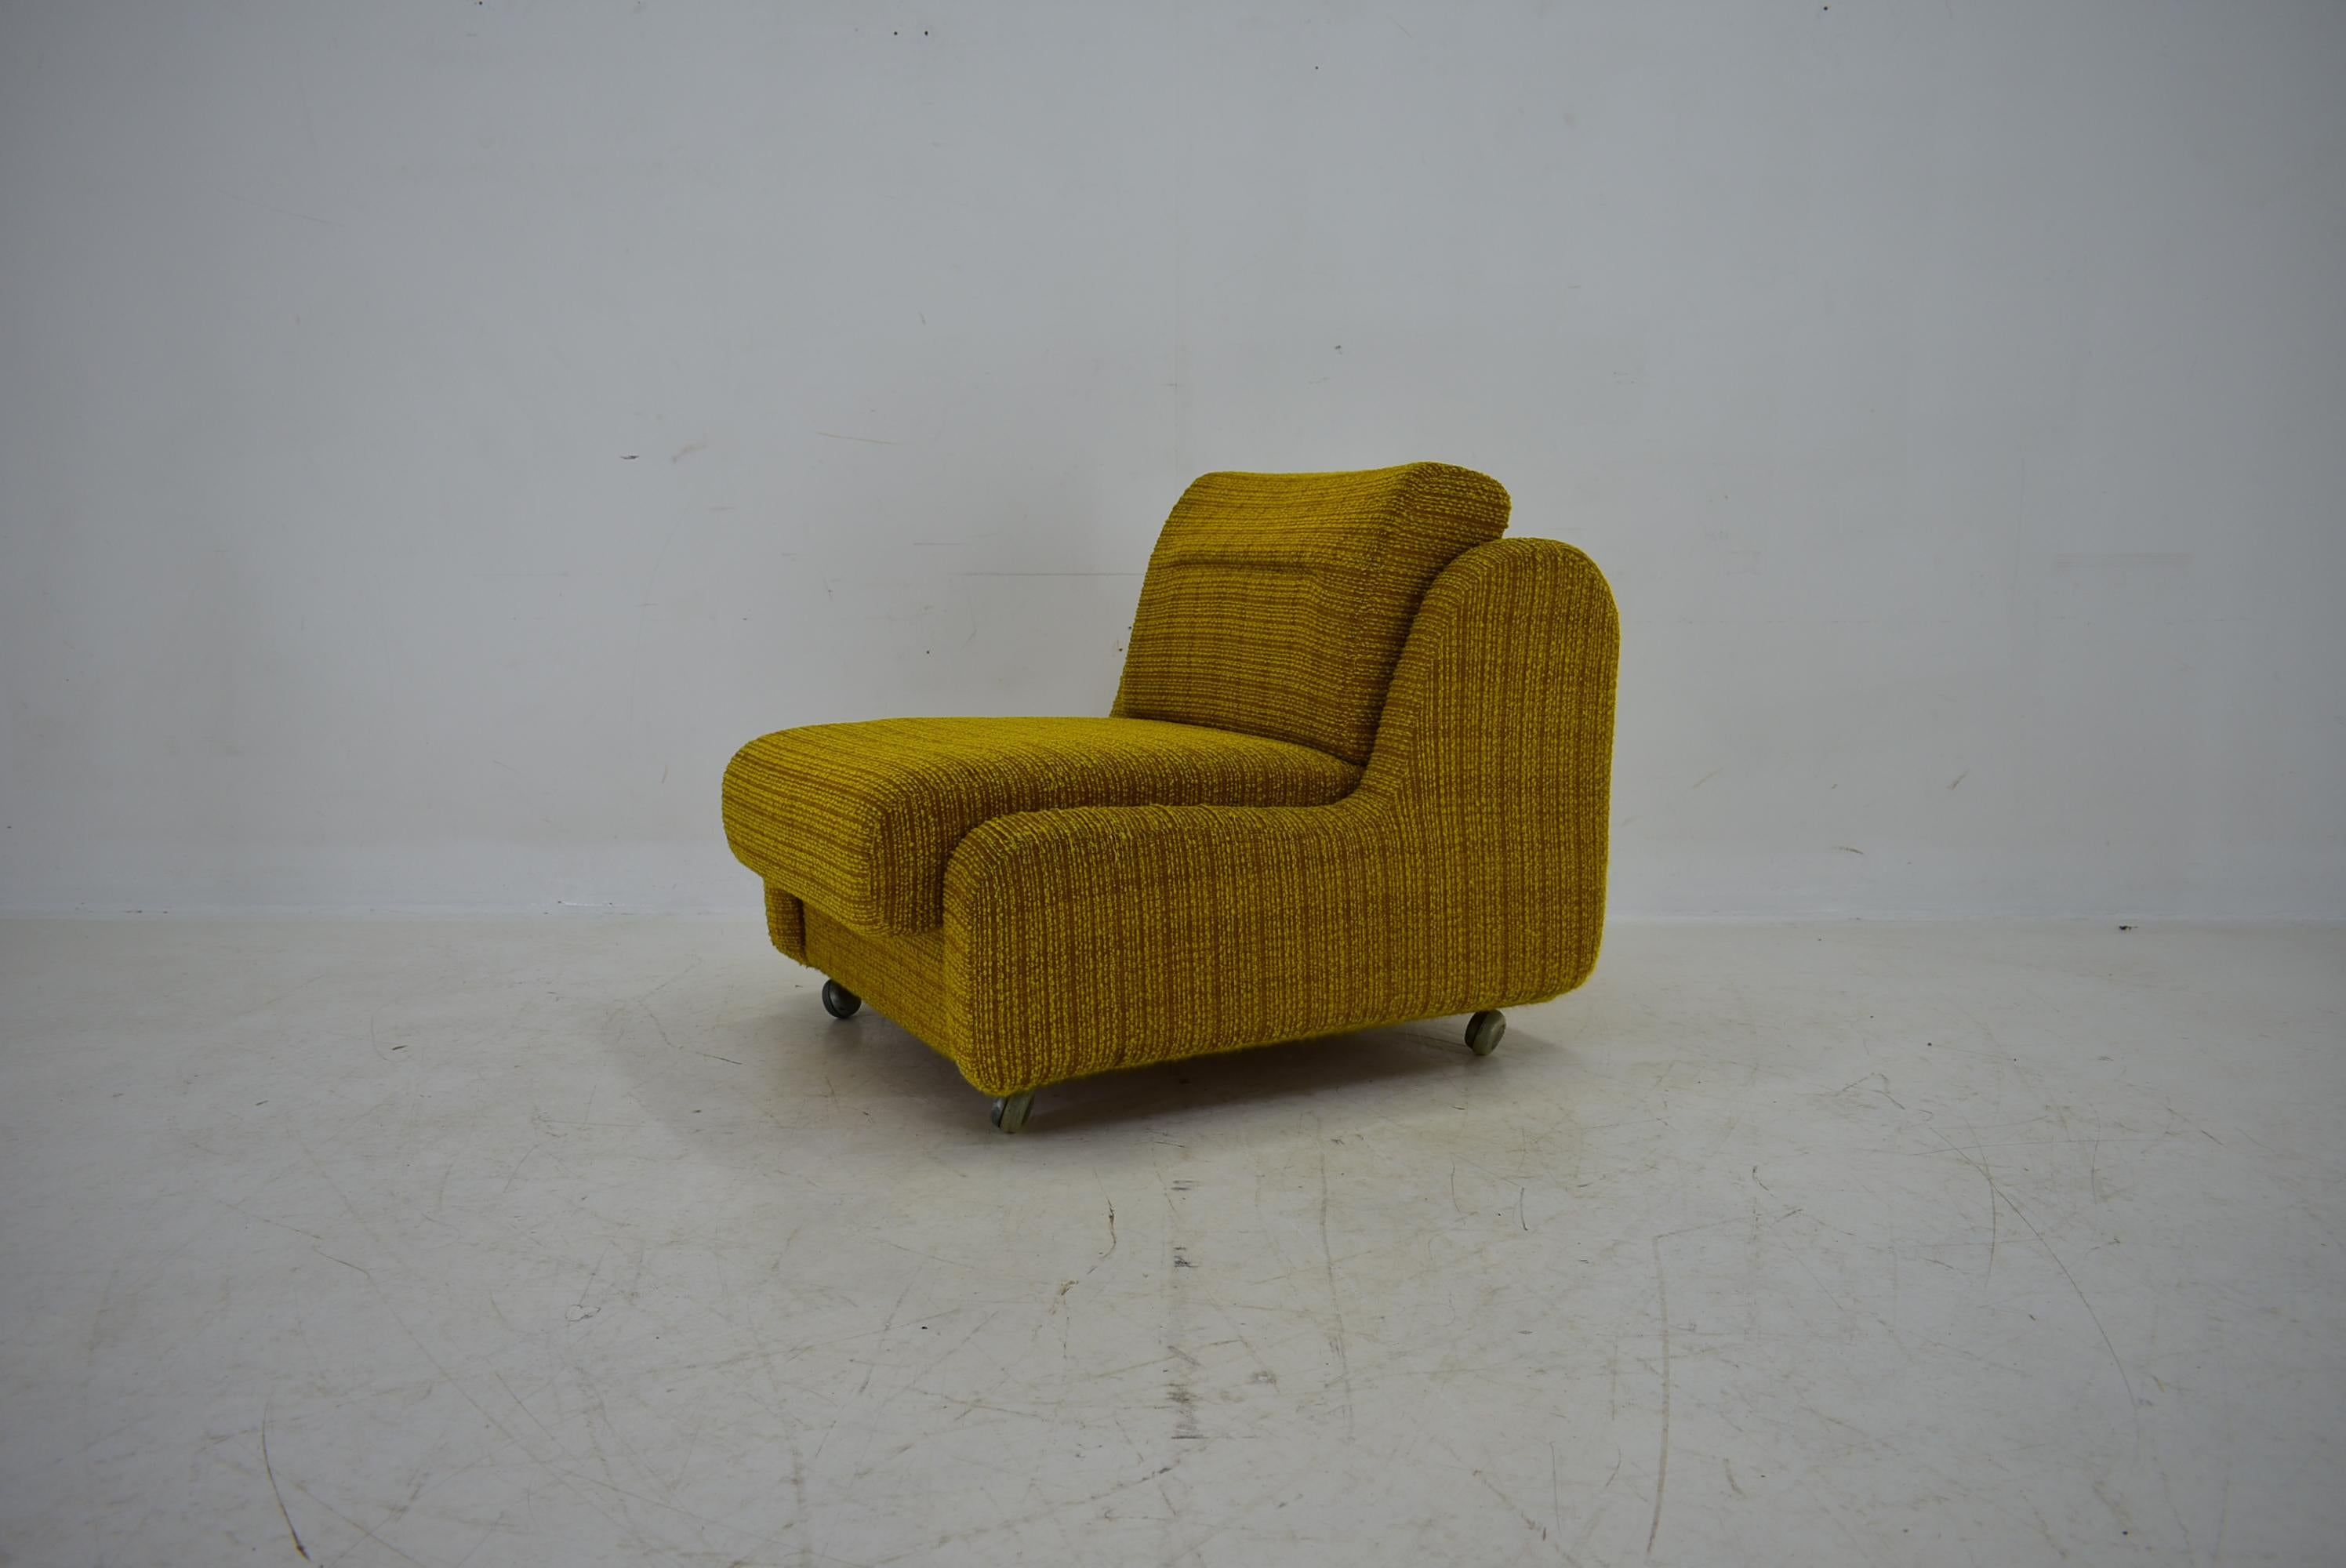 Made in Czechoslovakia .
Designer architect Milan Čeček .
Good original condition  .
Seat Height 39cm .